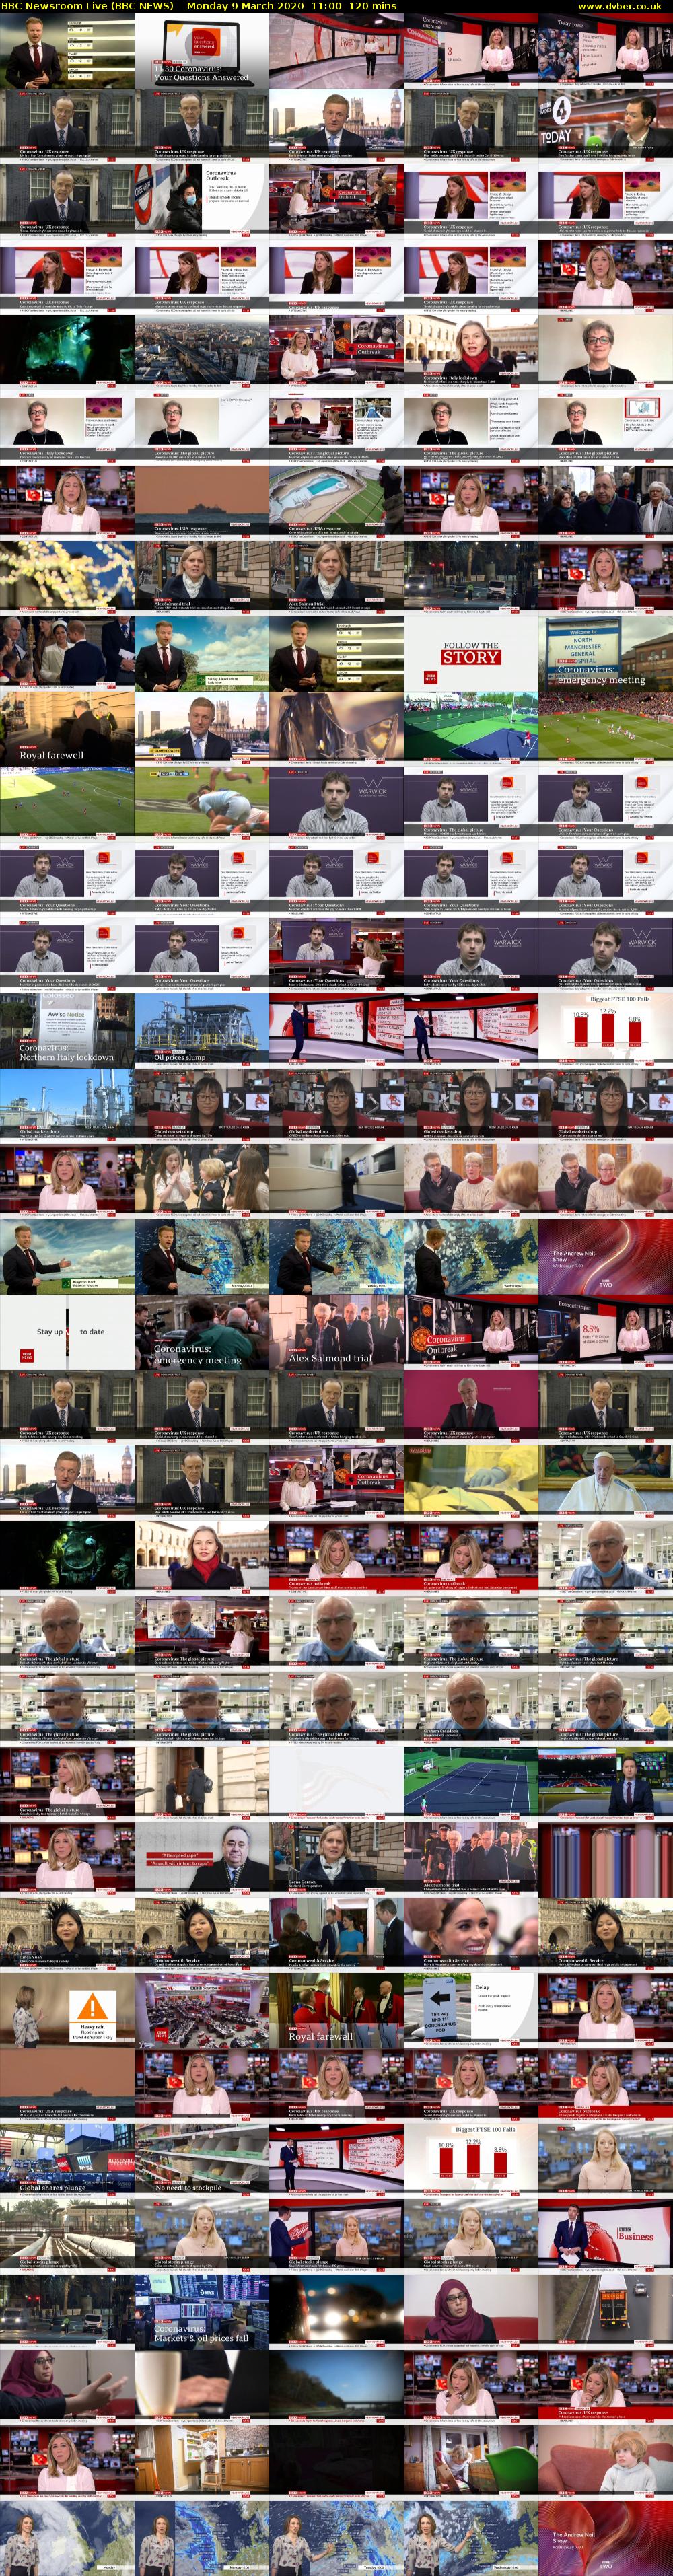 BBC Newsroom Live (BBC NEWS) Monday 9 March 2020 11:00 - 13:00